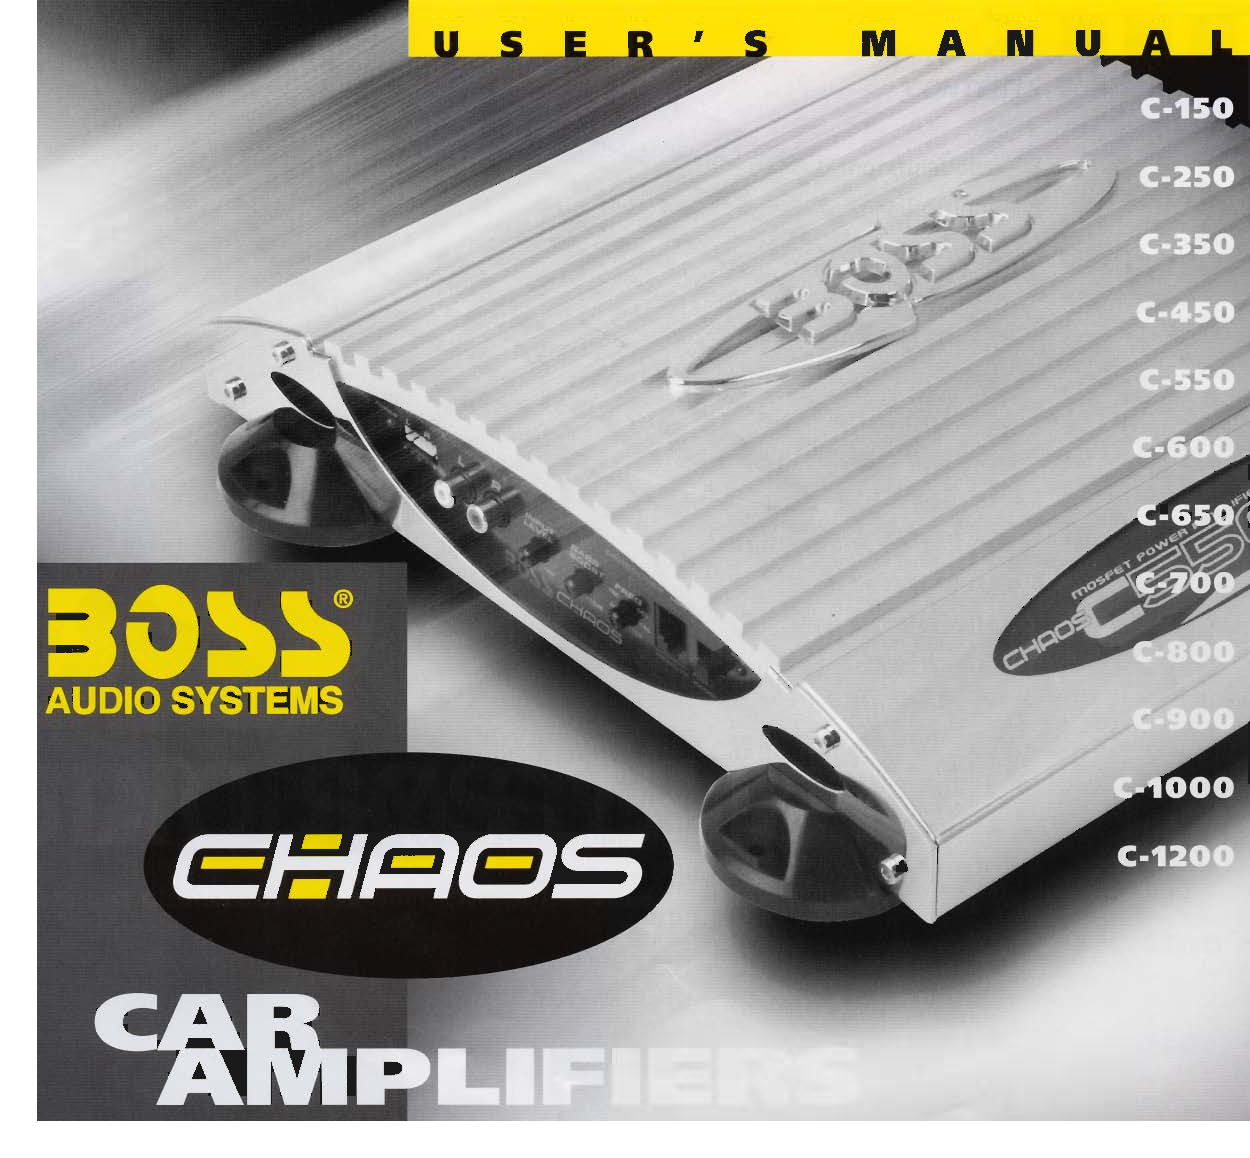 BOSS C1000, C800, C900, C1200, C150 User Manual